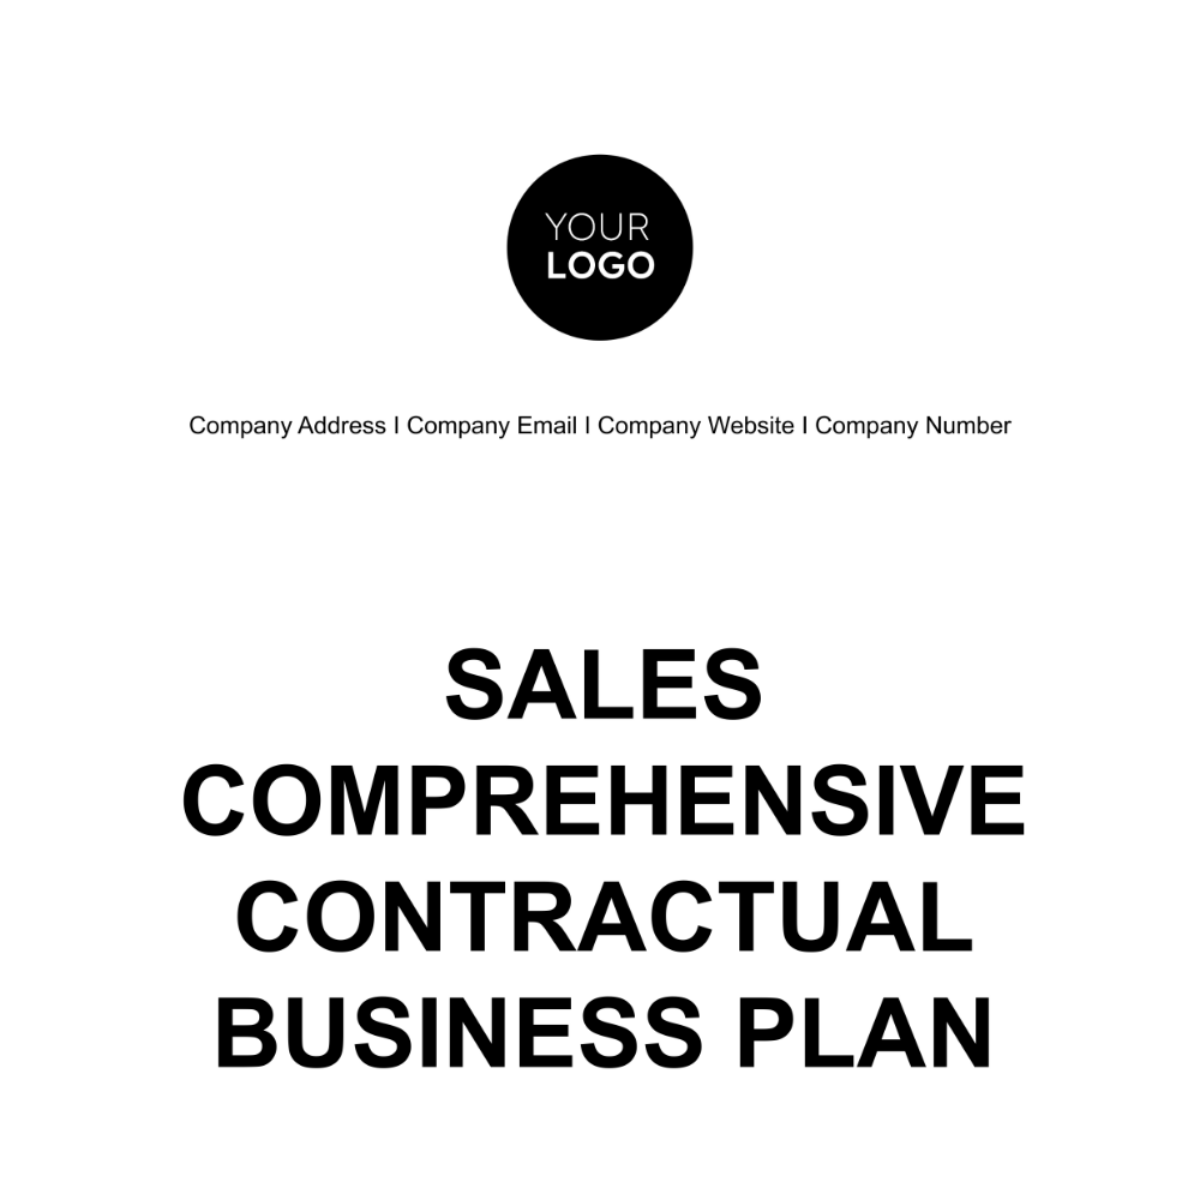 Sales Comprehensive Contractual Business Plan Template